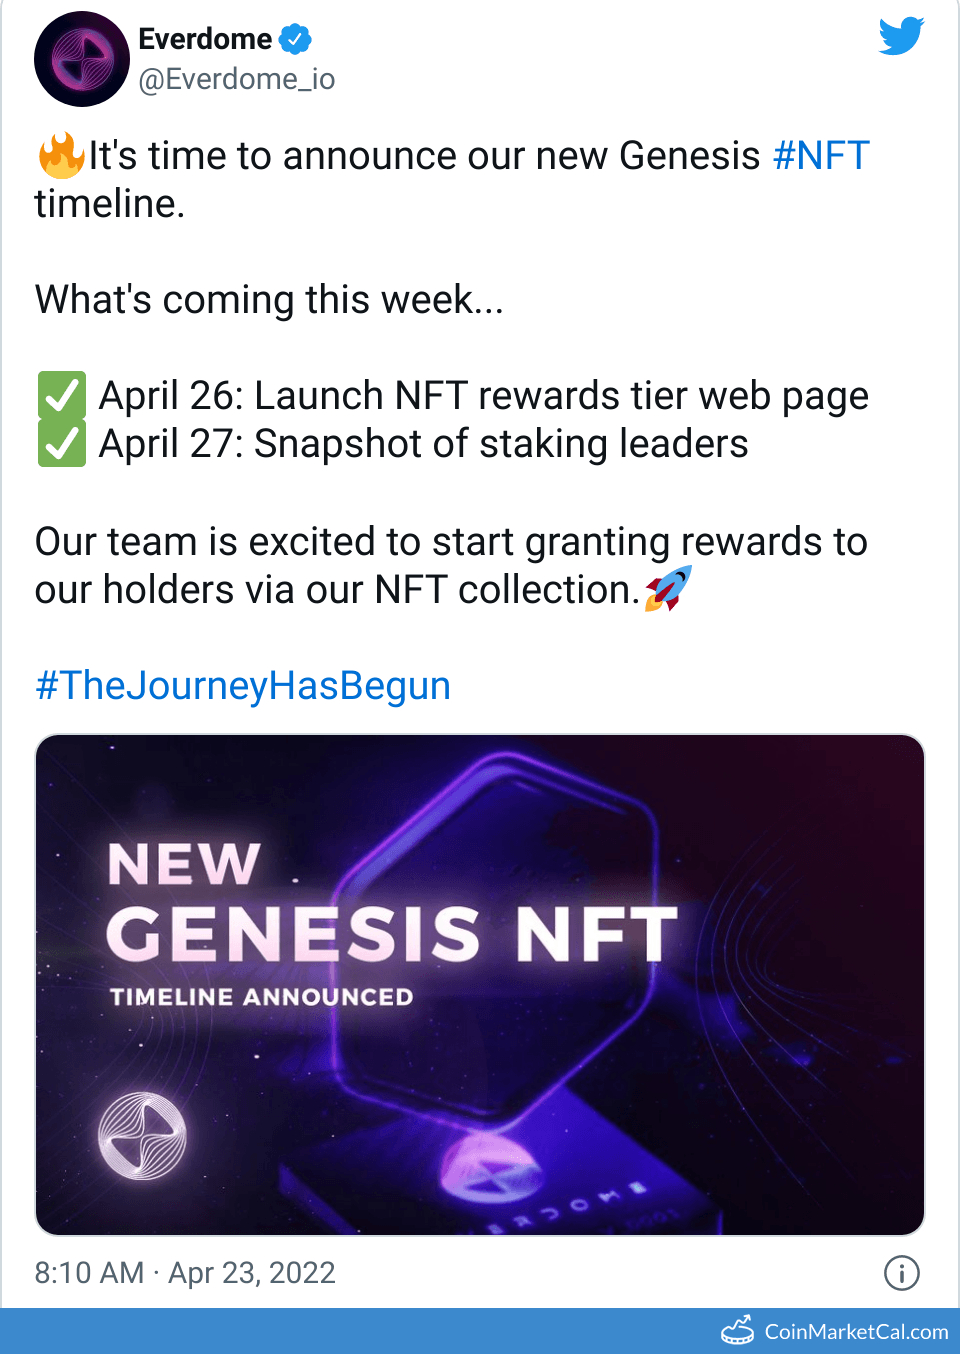 NFT Rewards Tier Web Page image